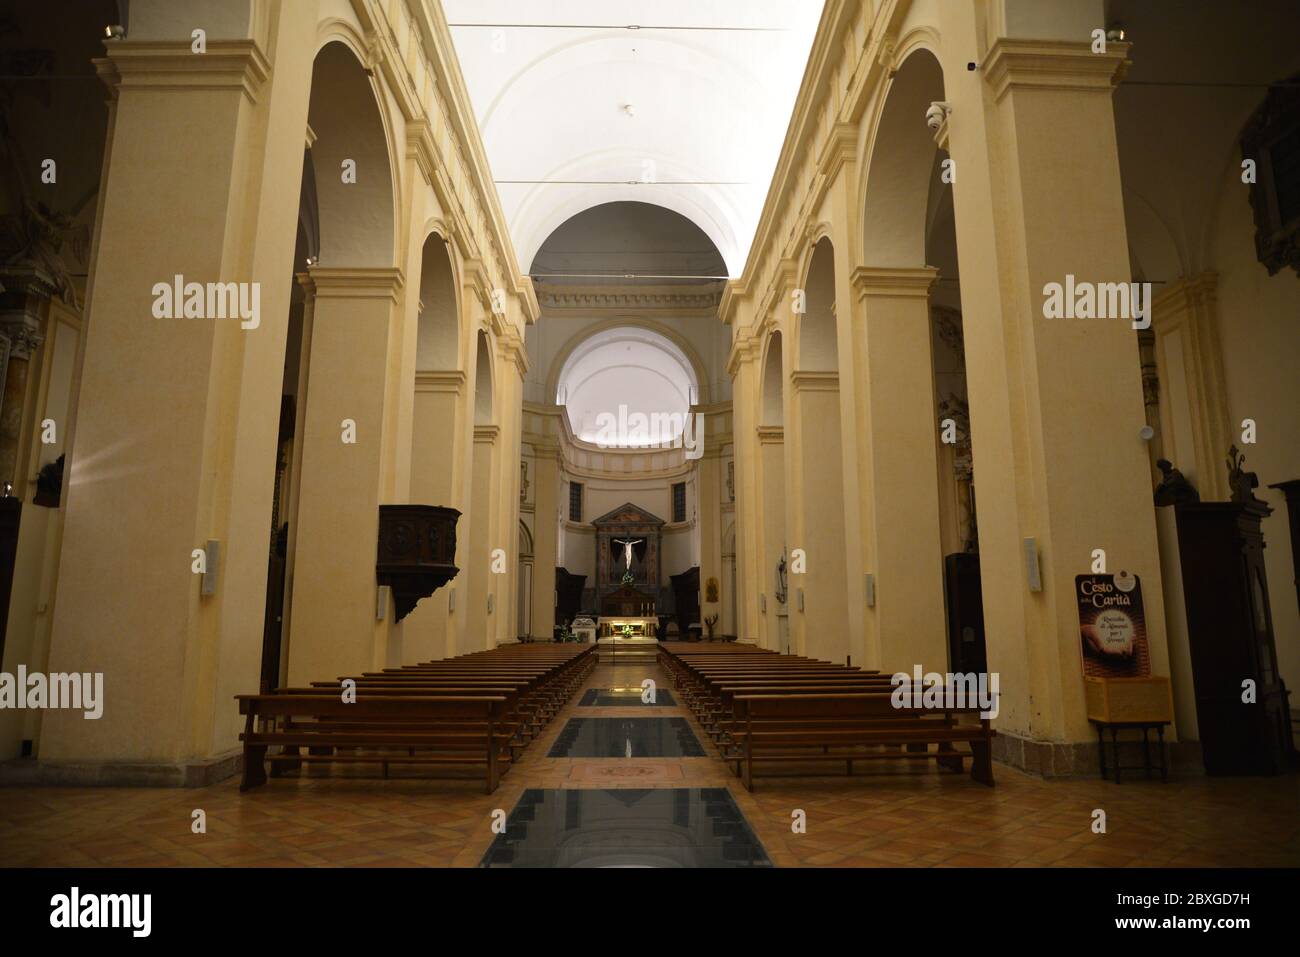 Interior of the Cattedrale di San Rufino di Assisi, Assisi, Italy Stock Photo